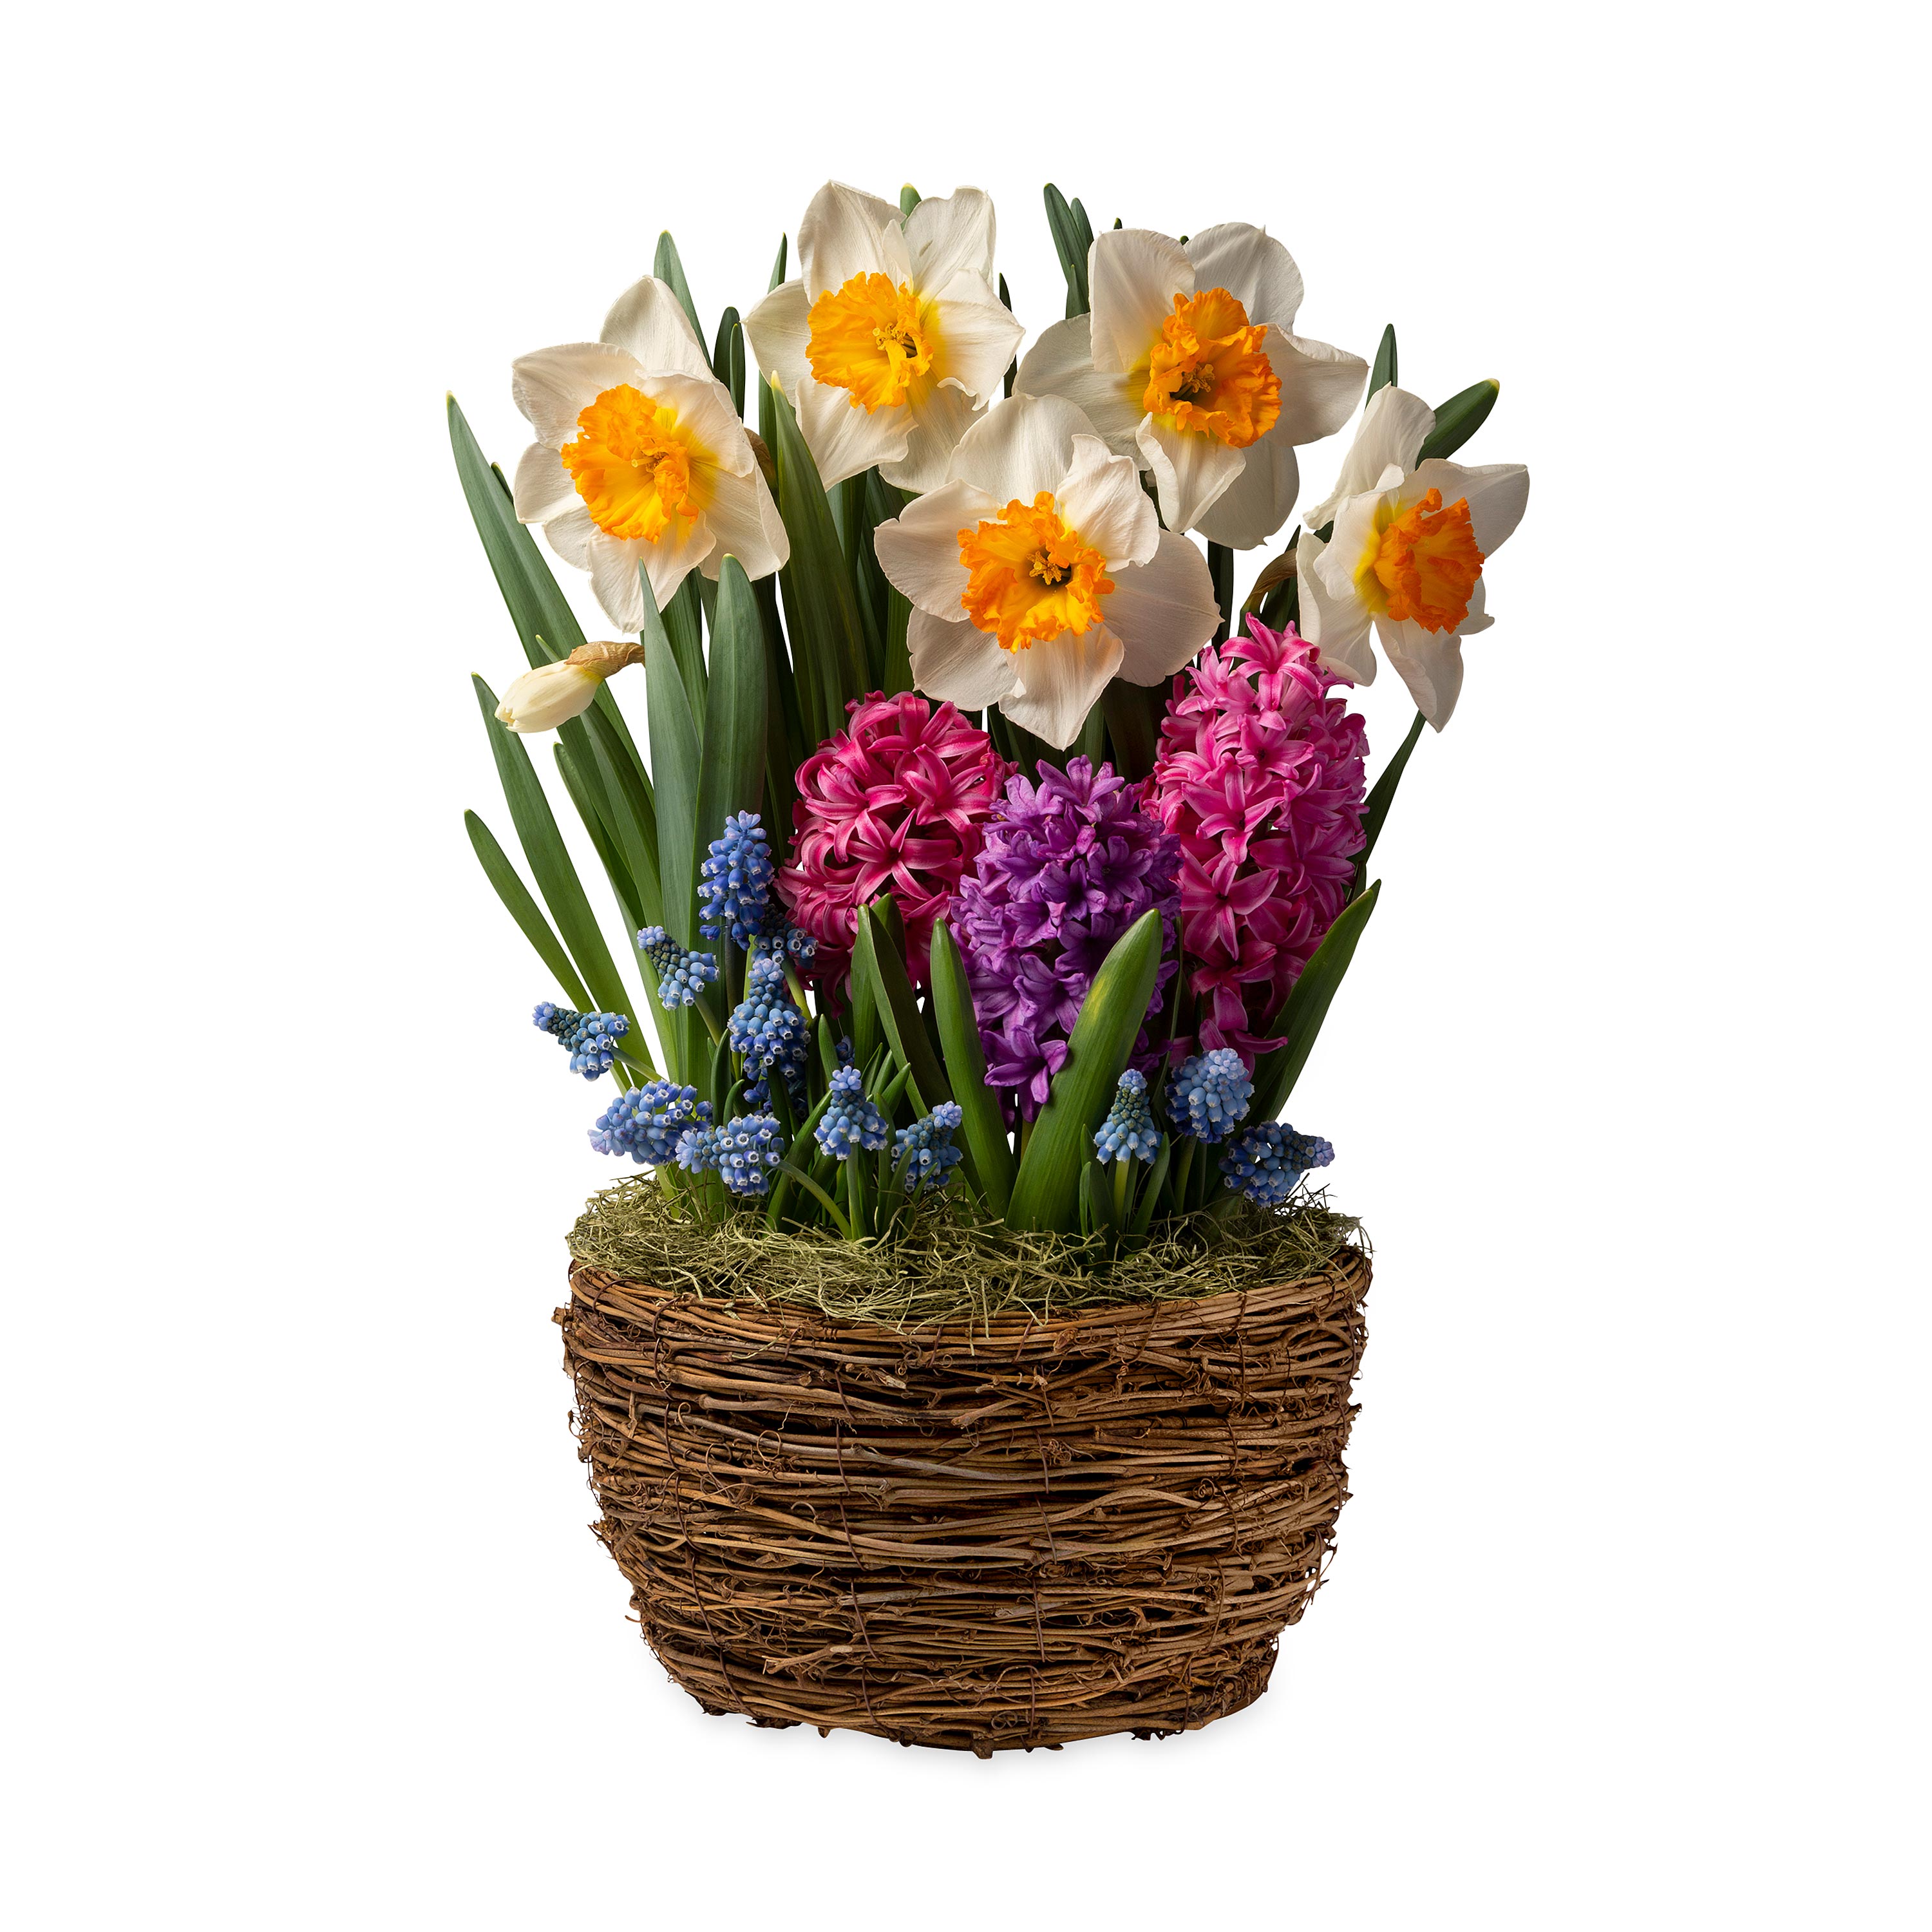 Pre-Planted Daffodil and Hyacinth Bulb Garden Gift Basket